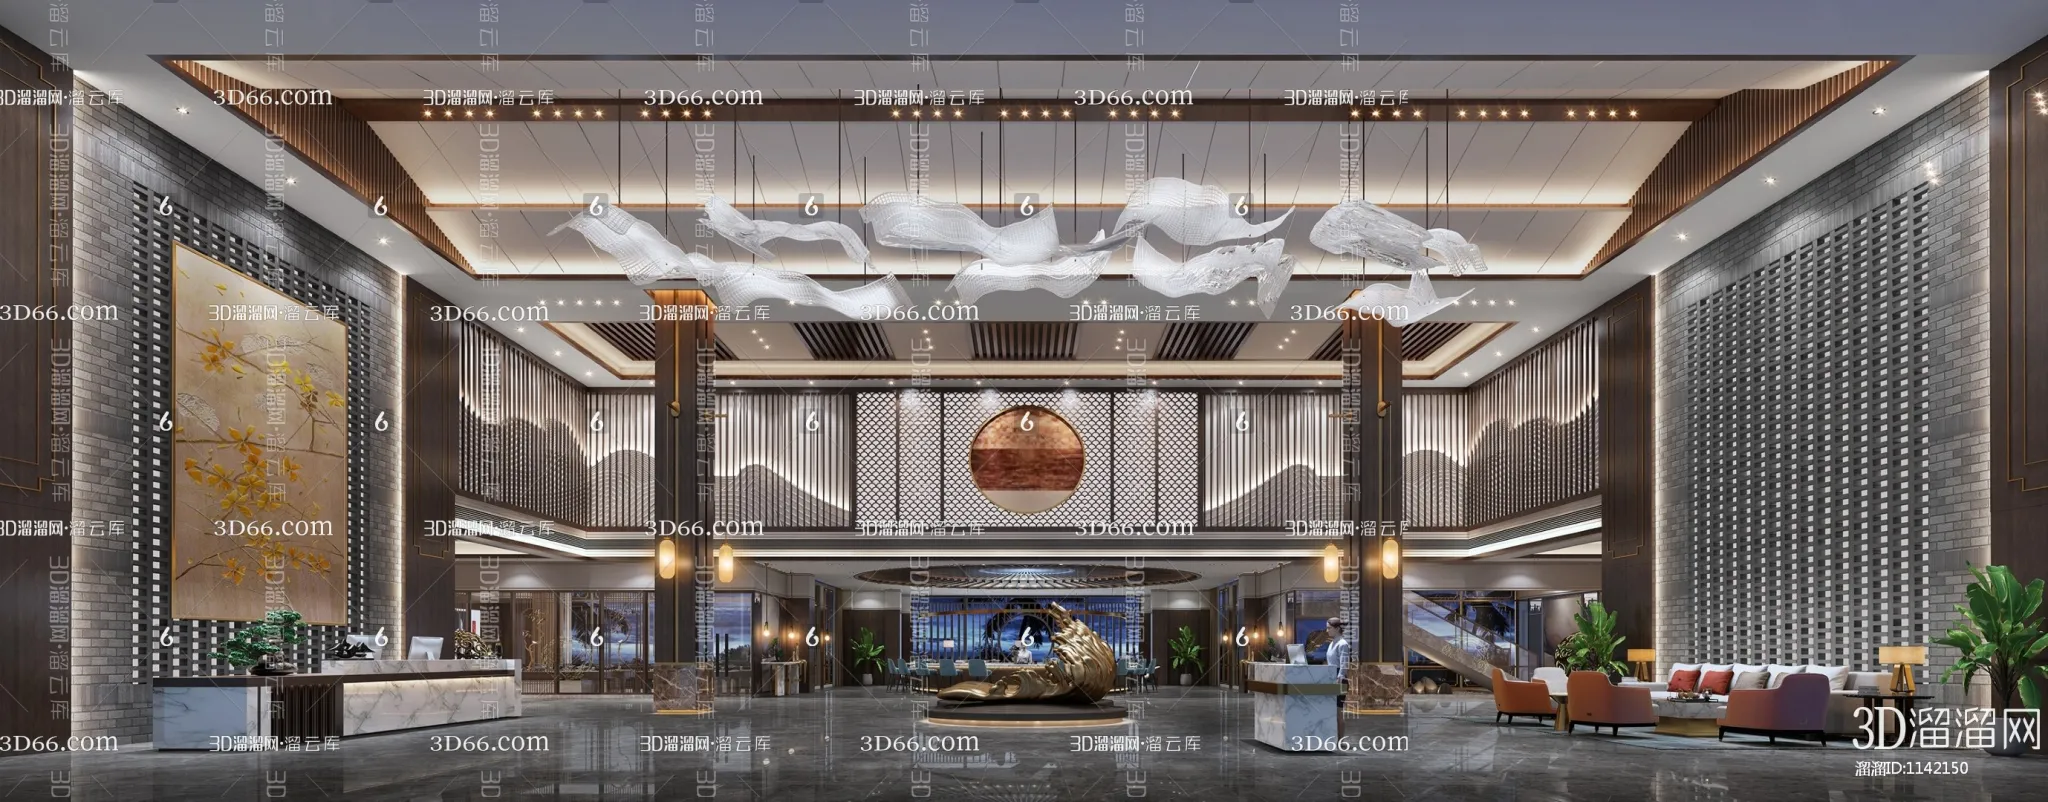 Hotel Lobby 3D Scenes – 0497